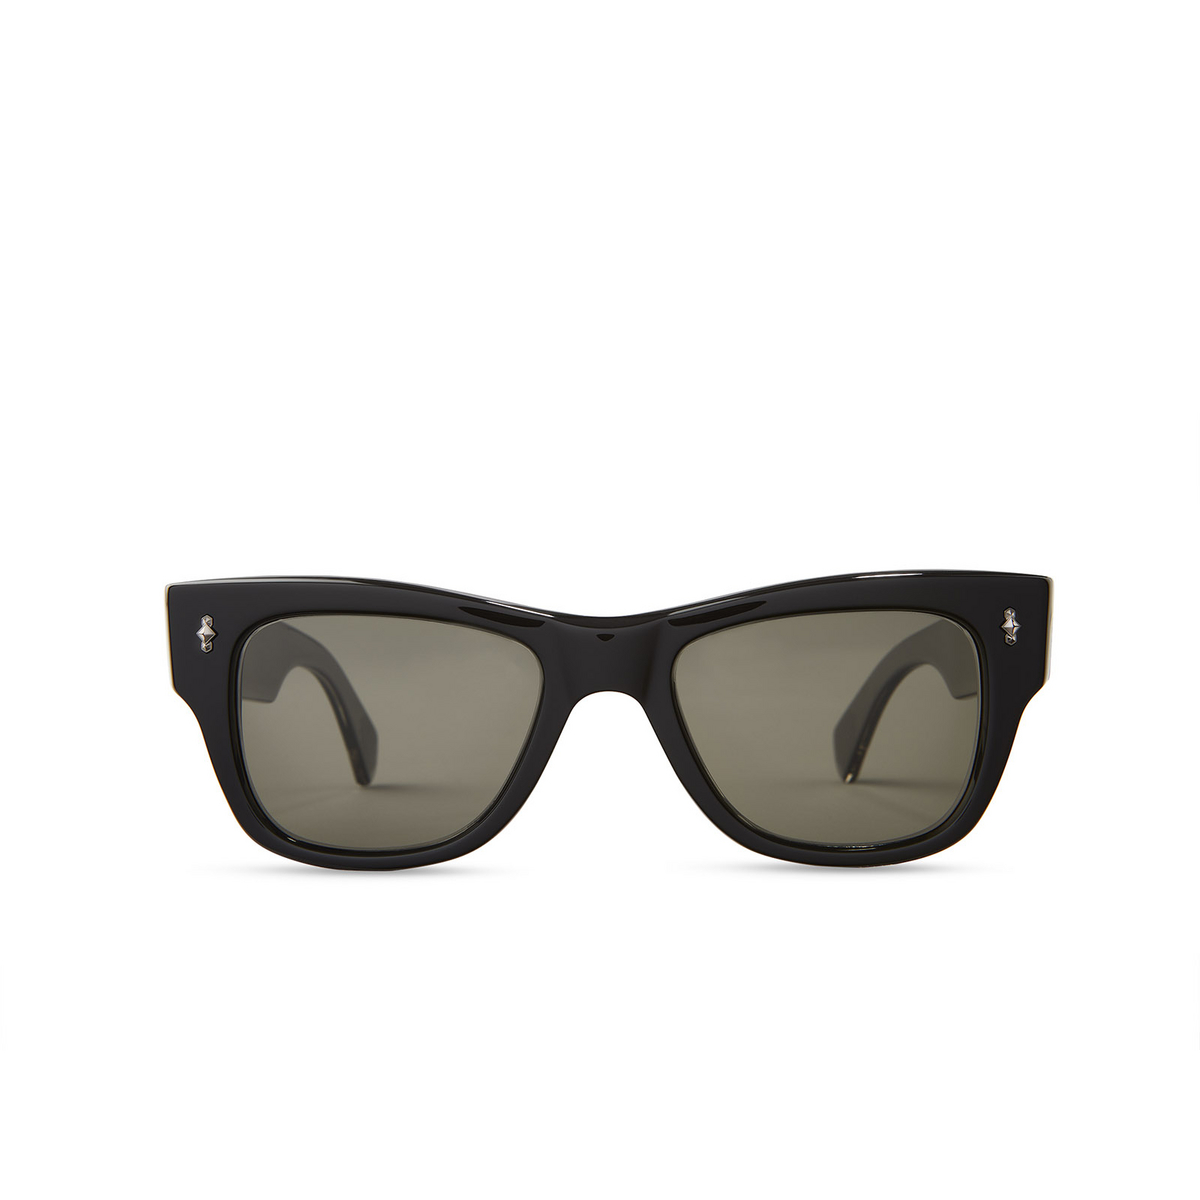 Mr. Leight DUKE S Sunglasses BK-GM/OXFGYPLR Black-Gunmetal - front view